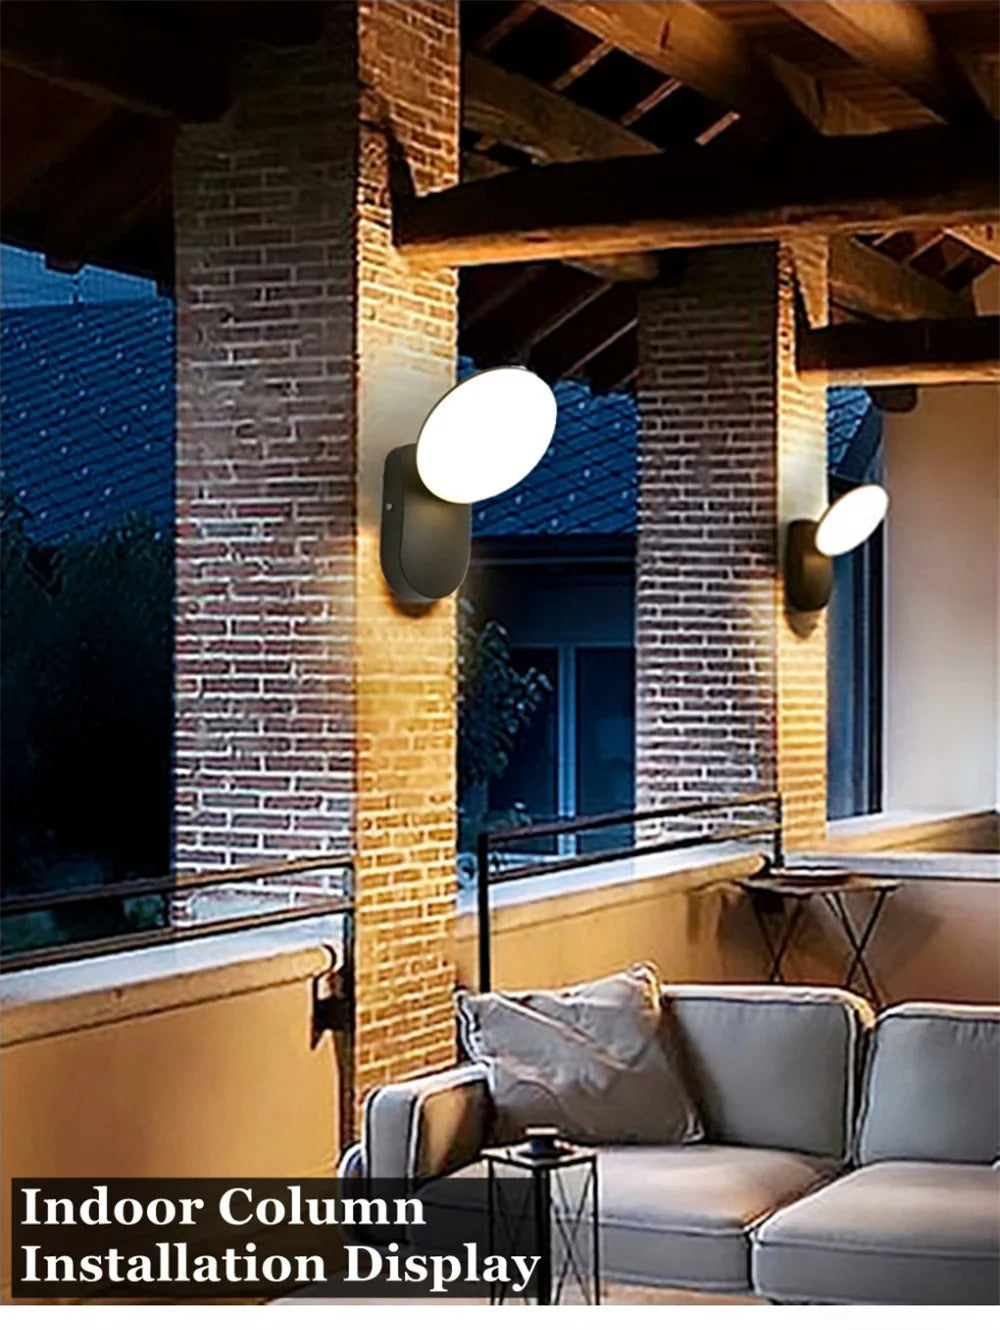 LED Wall Light, Elegant indoor display for columns or walls